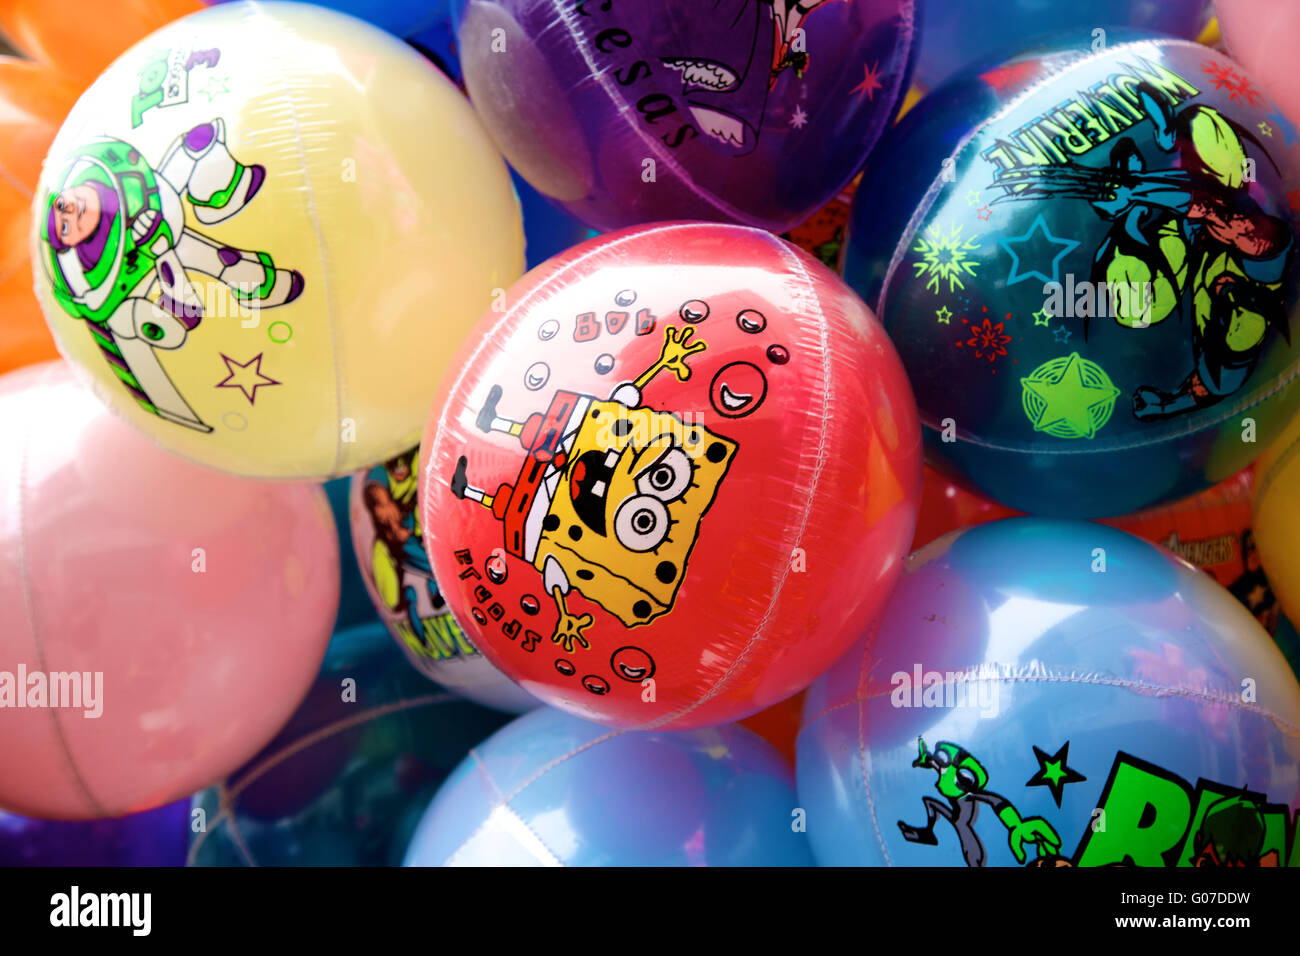 Ballons at Aguascalientes mexico Stock Photo